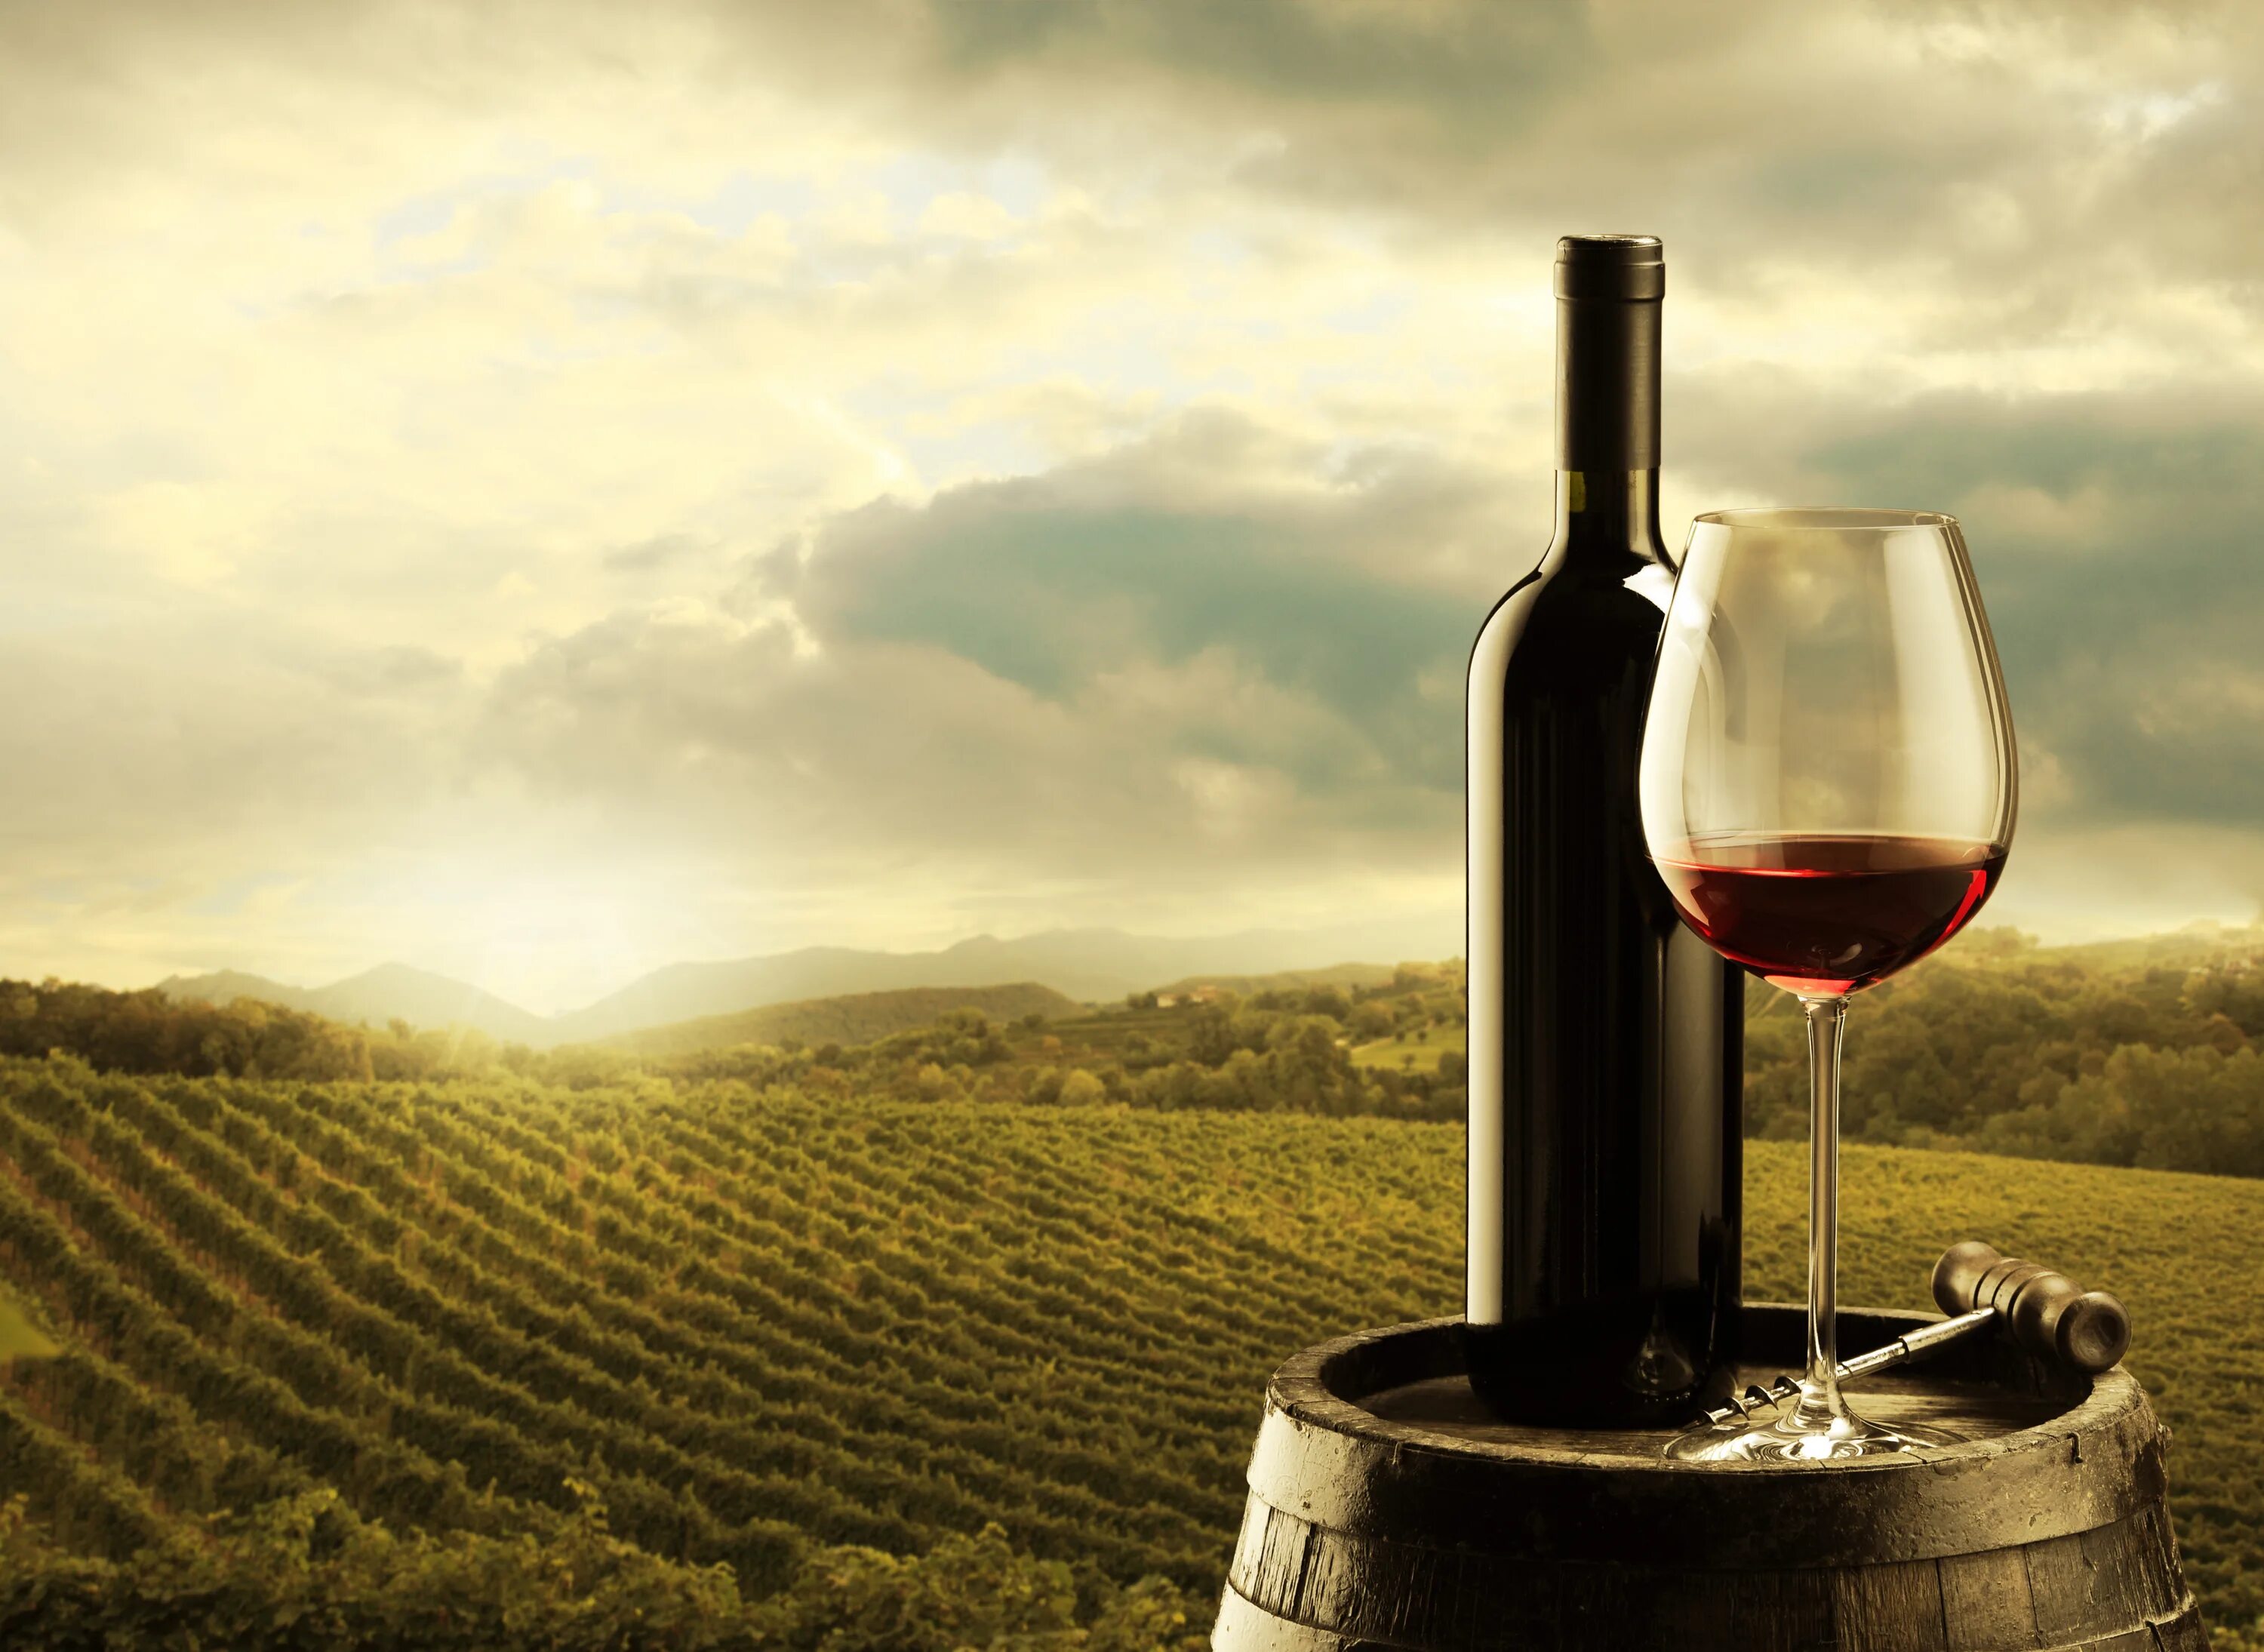 Винодельни Тосканы. Супертосканские вина. Шато Андре винодельня. Бутылка вина. Вторая половина вина